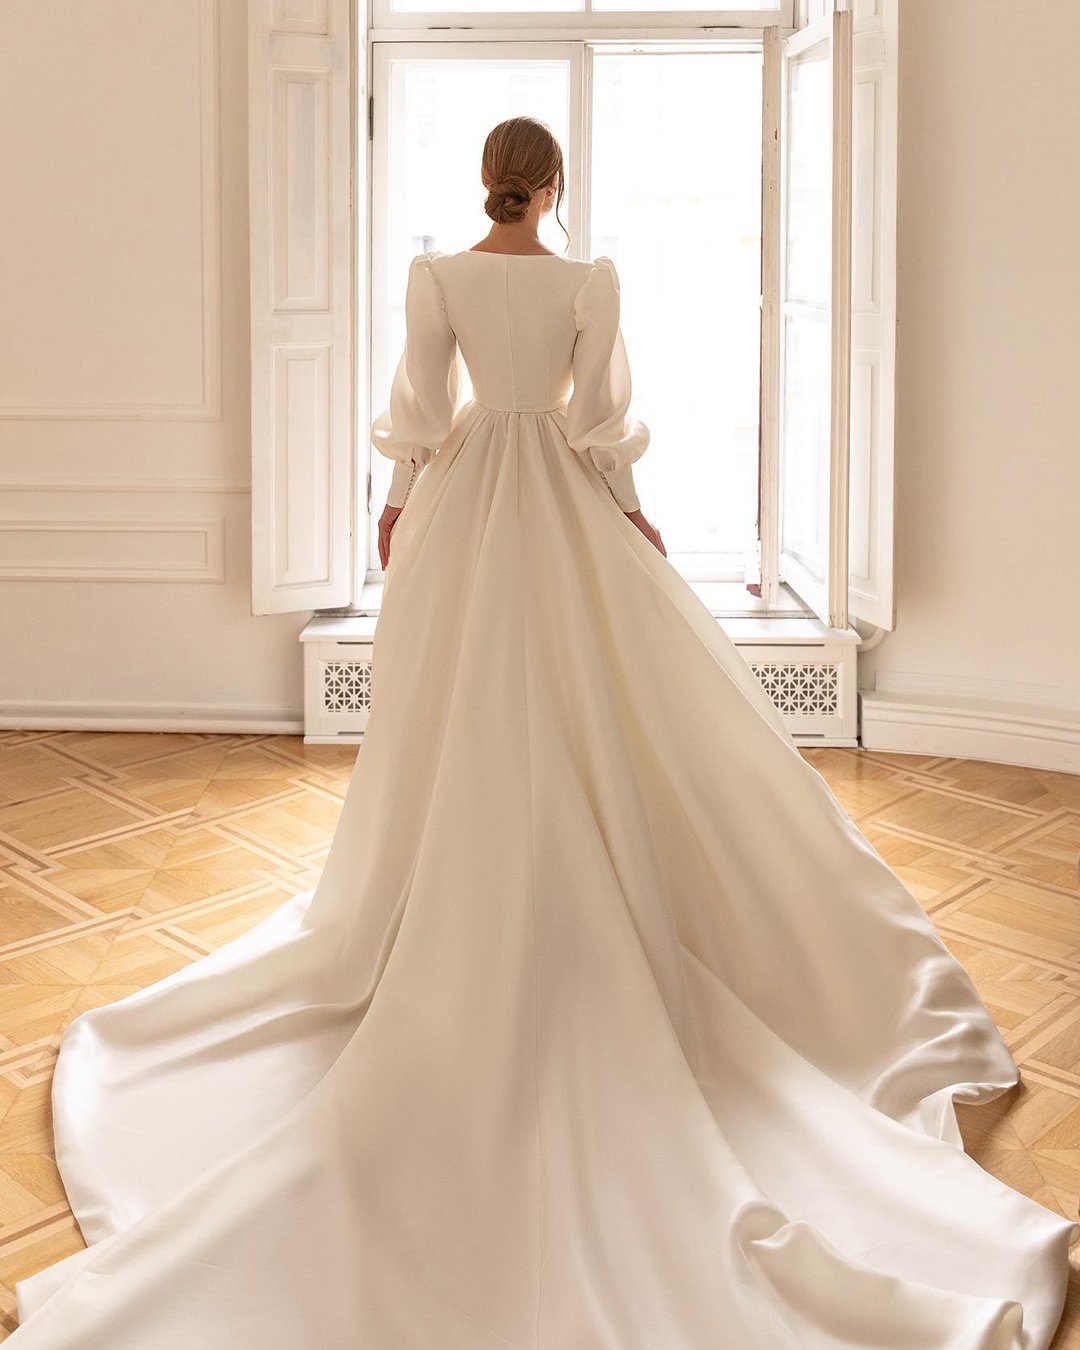 modest wedding dresses ball gown with long sleeves simple eva lendel